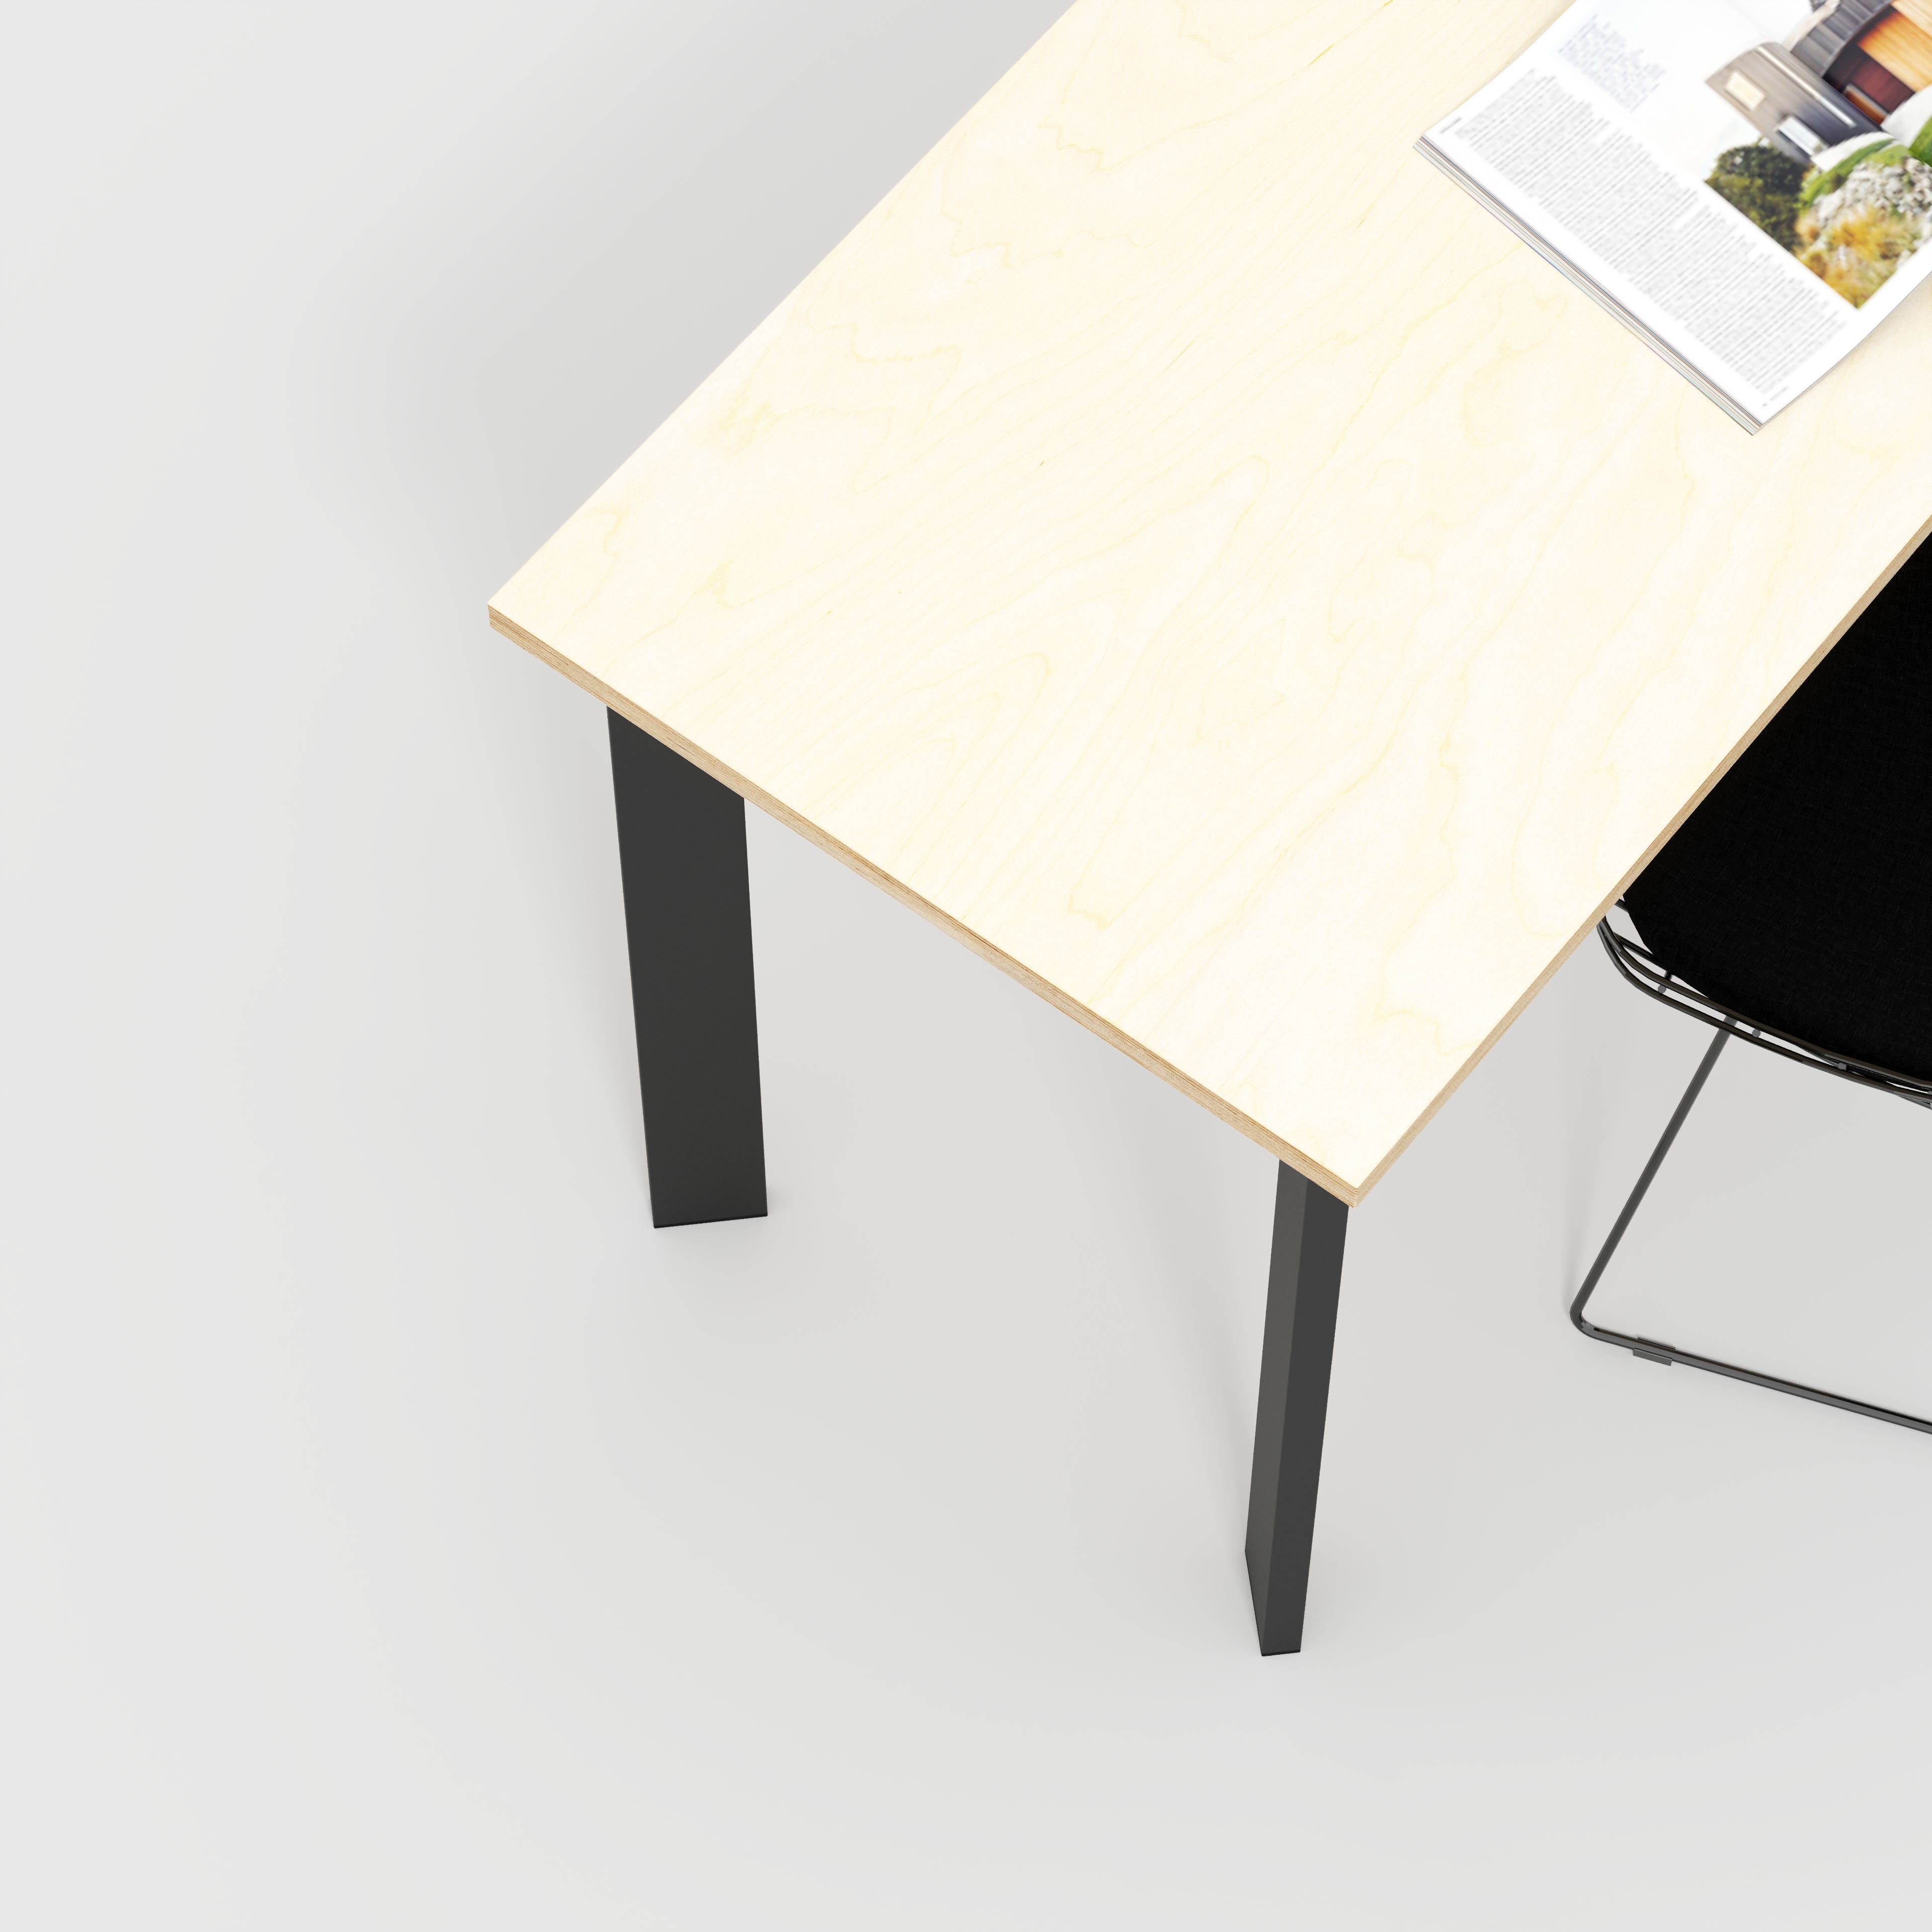 Custom Plywood Desk with Rectangular Single Pin Legs